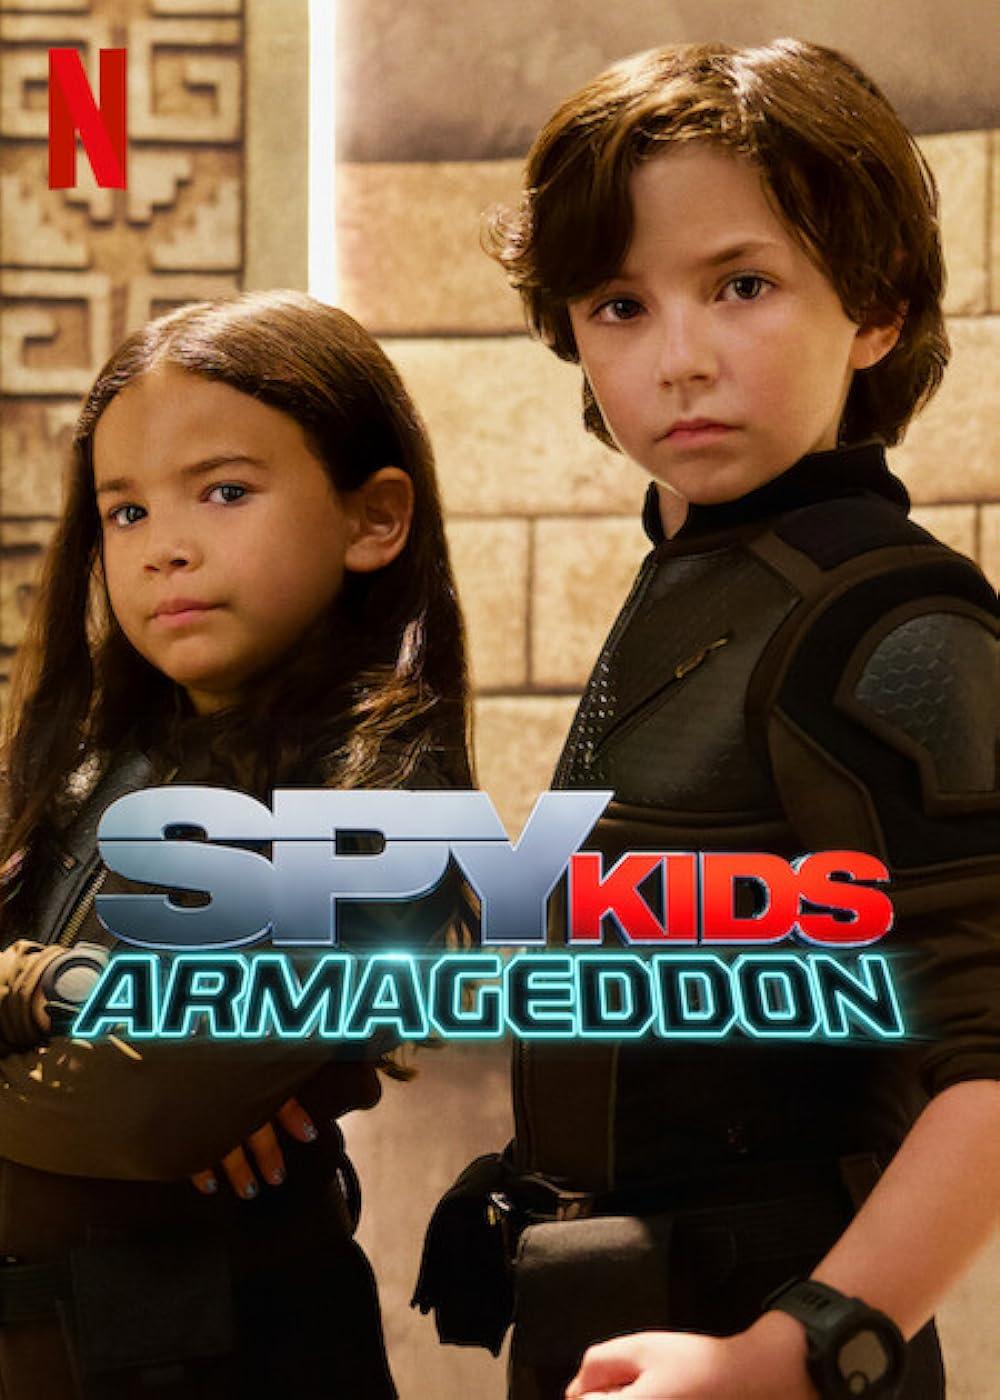 Spy Kids: Armageddon (September 22) - Streaming on NetflixNetflix welcomes the fifth installment of the beloved 